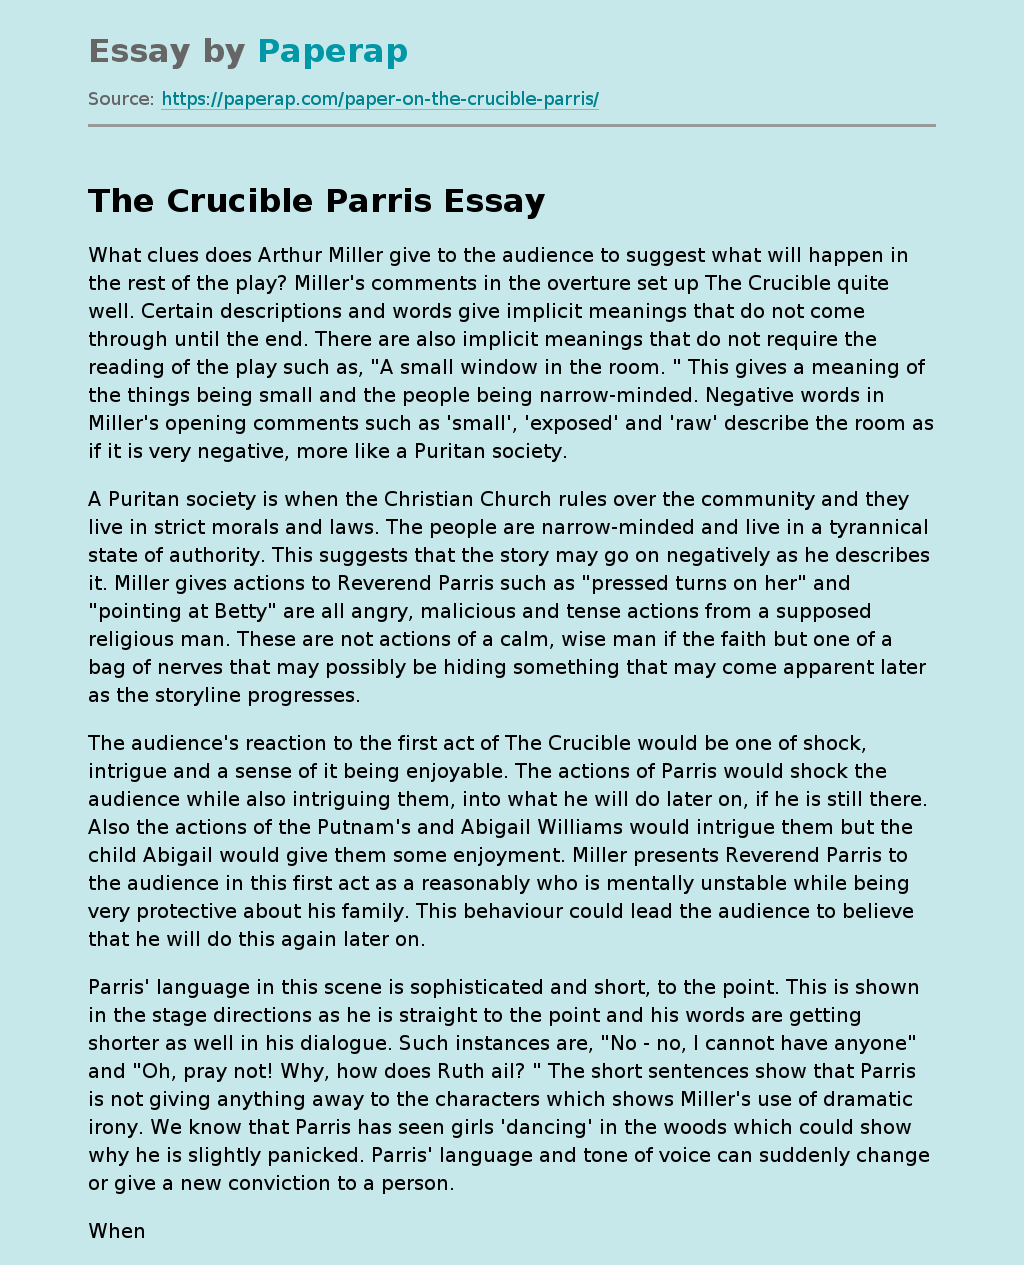 The Crucible Parris